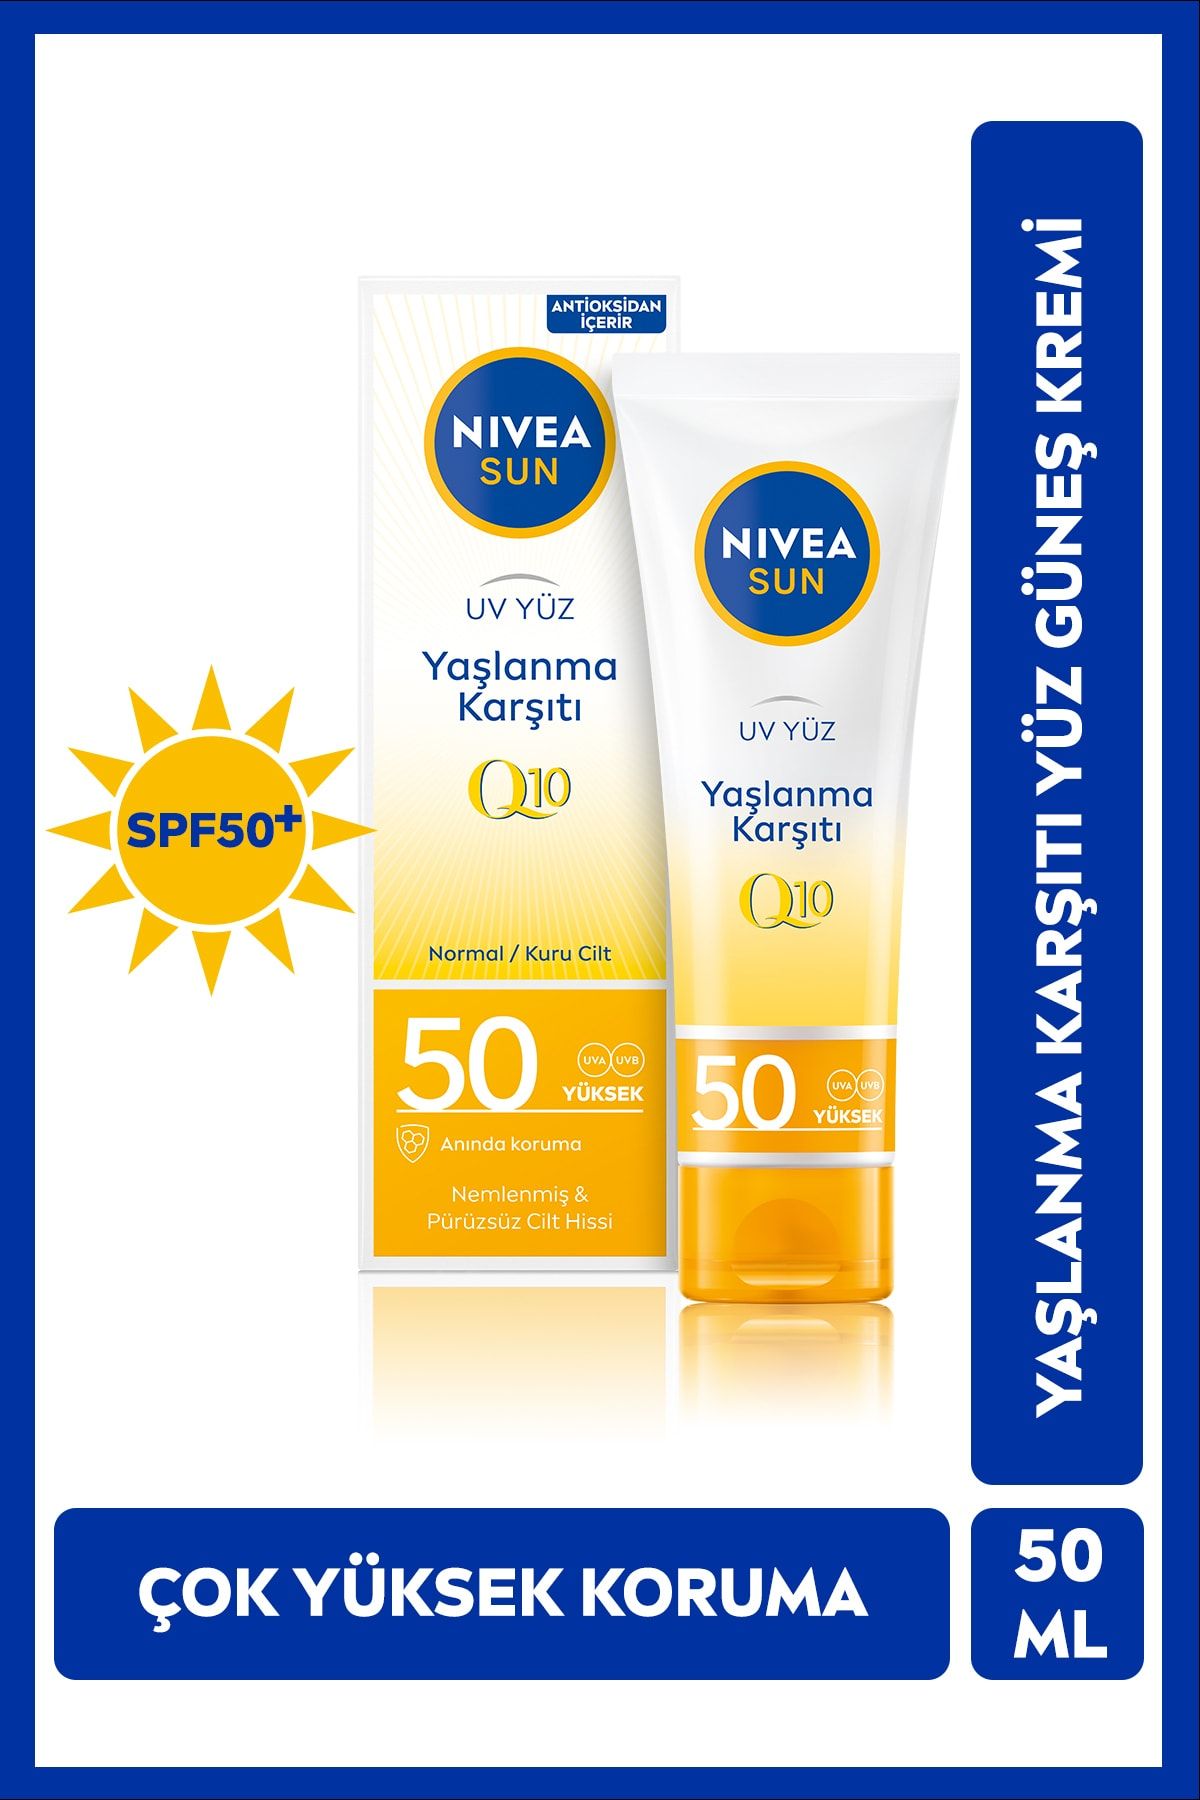 Nivea Sun SPF50+ Yaşlanma & Leke Karşıtı Q10 Yüz Güneş Kremi 50 ml, Çok Y